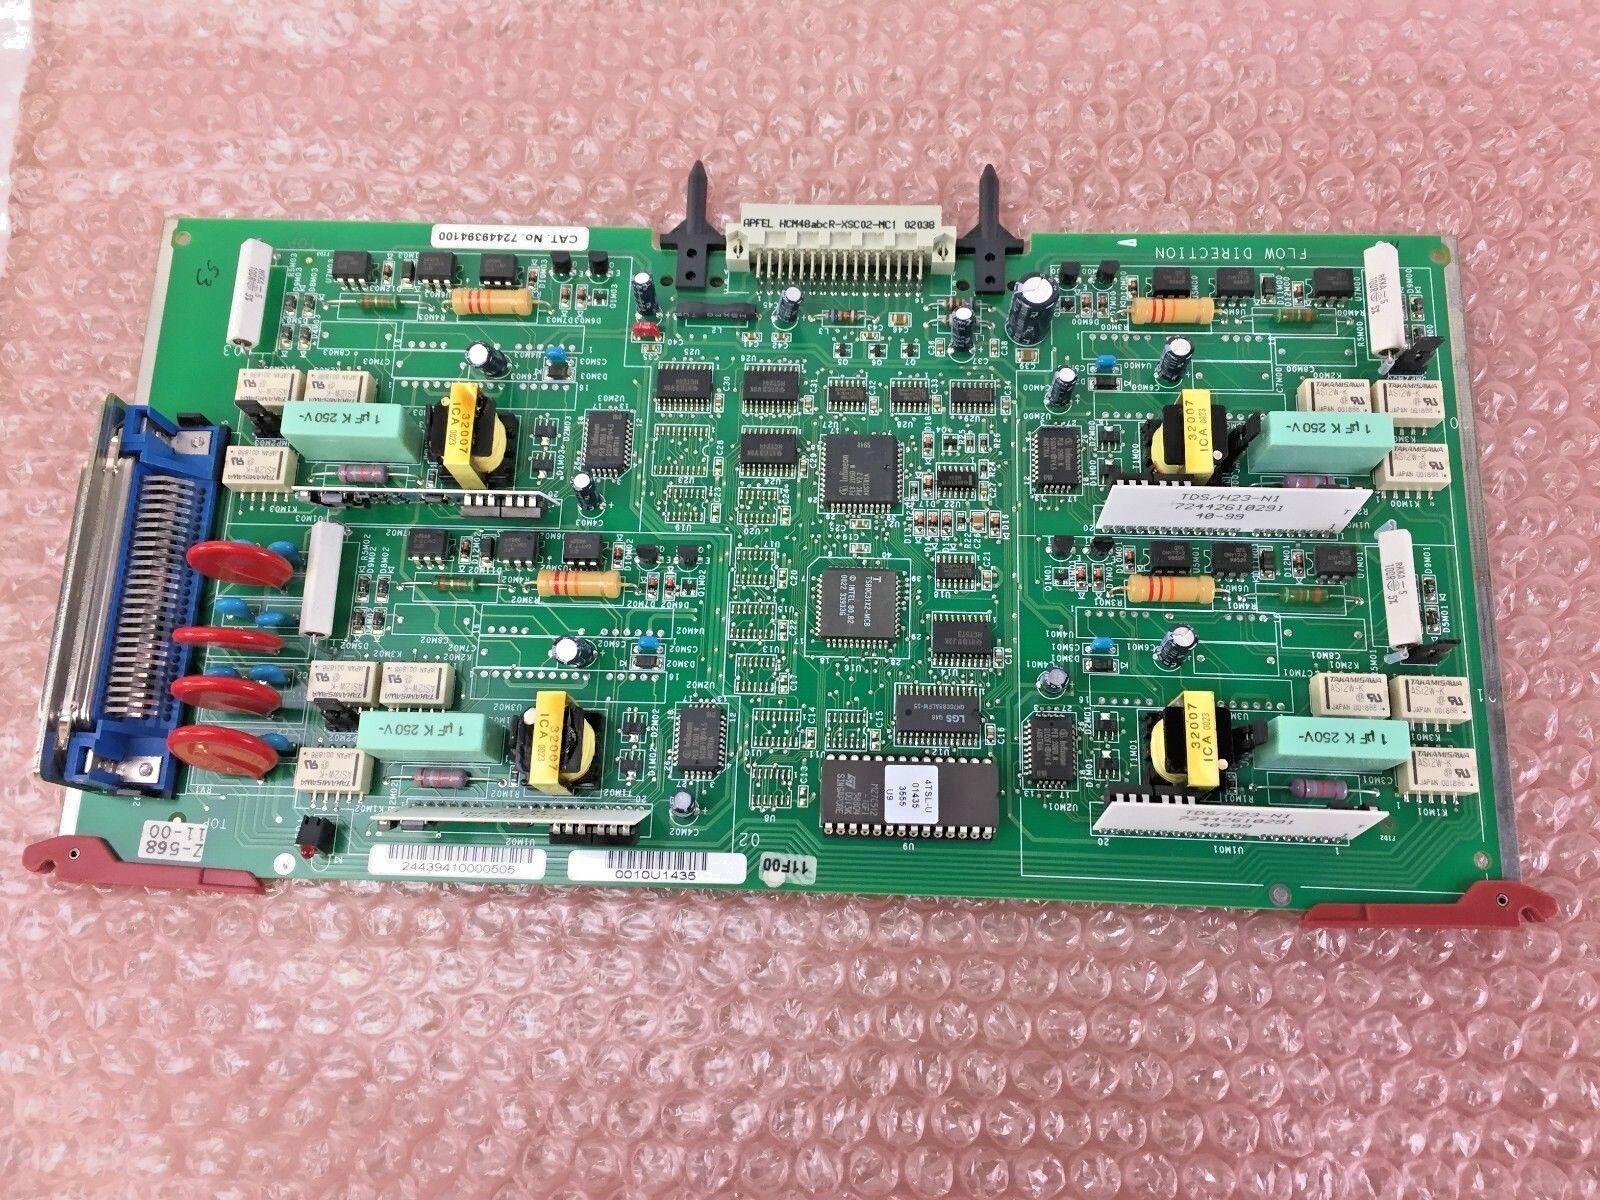 Apfel HCM48ABCR-XSC02-MC1 02038 Telecom Module Board